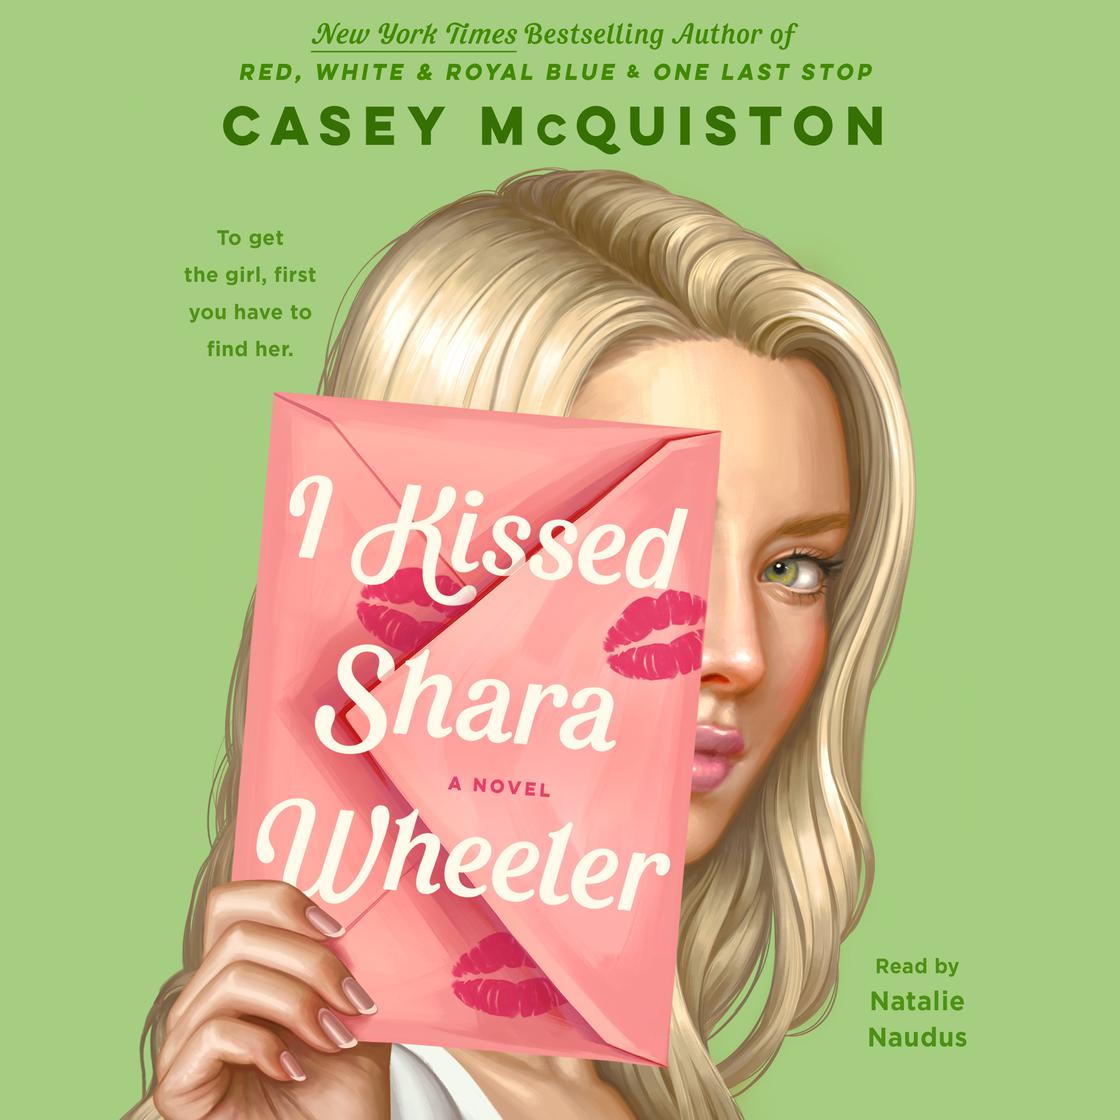 Casey McQuiston: I Kissed Shara Wheeler (AudiobookFormat, 2022, Macmillan Audio)